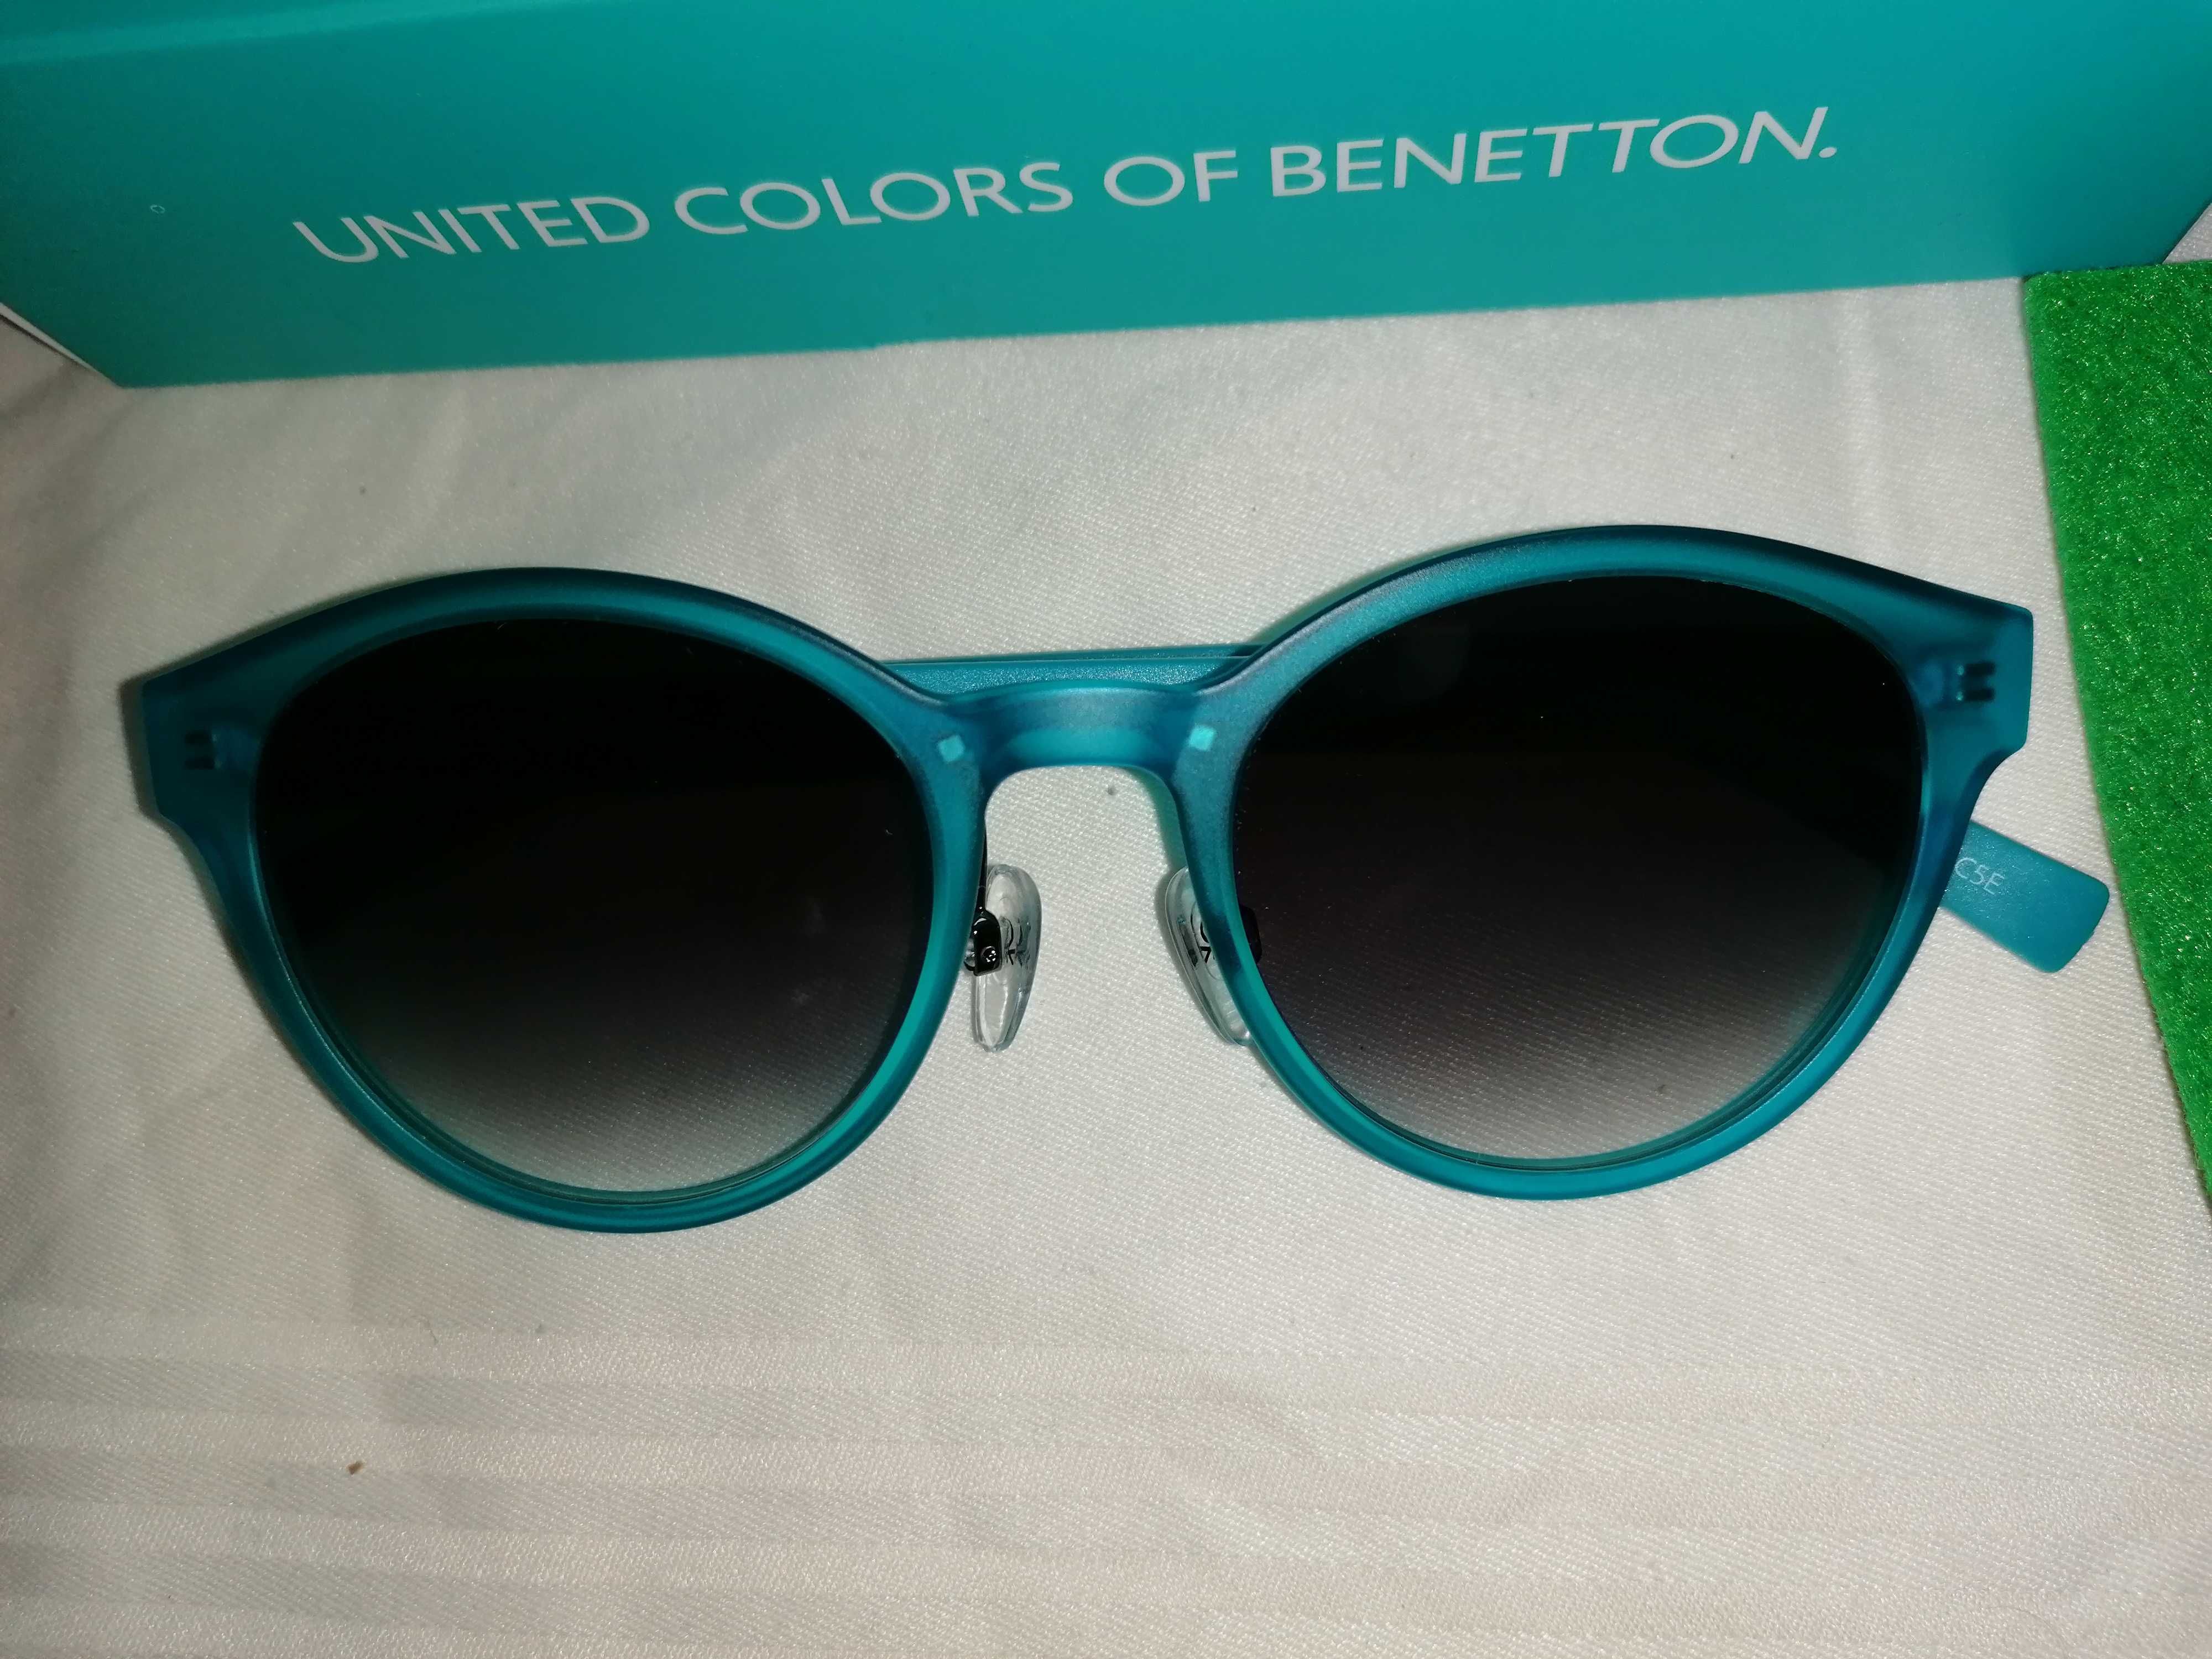 Ochelari de soare unisex barbati/femei United Colors of Benetton,noi